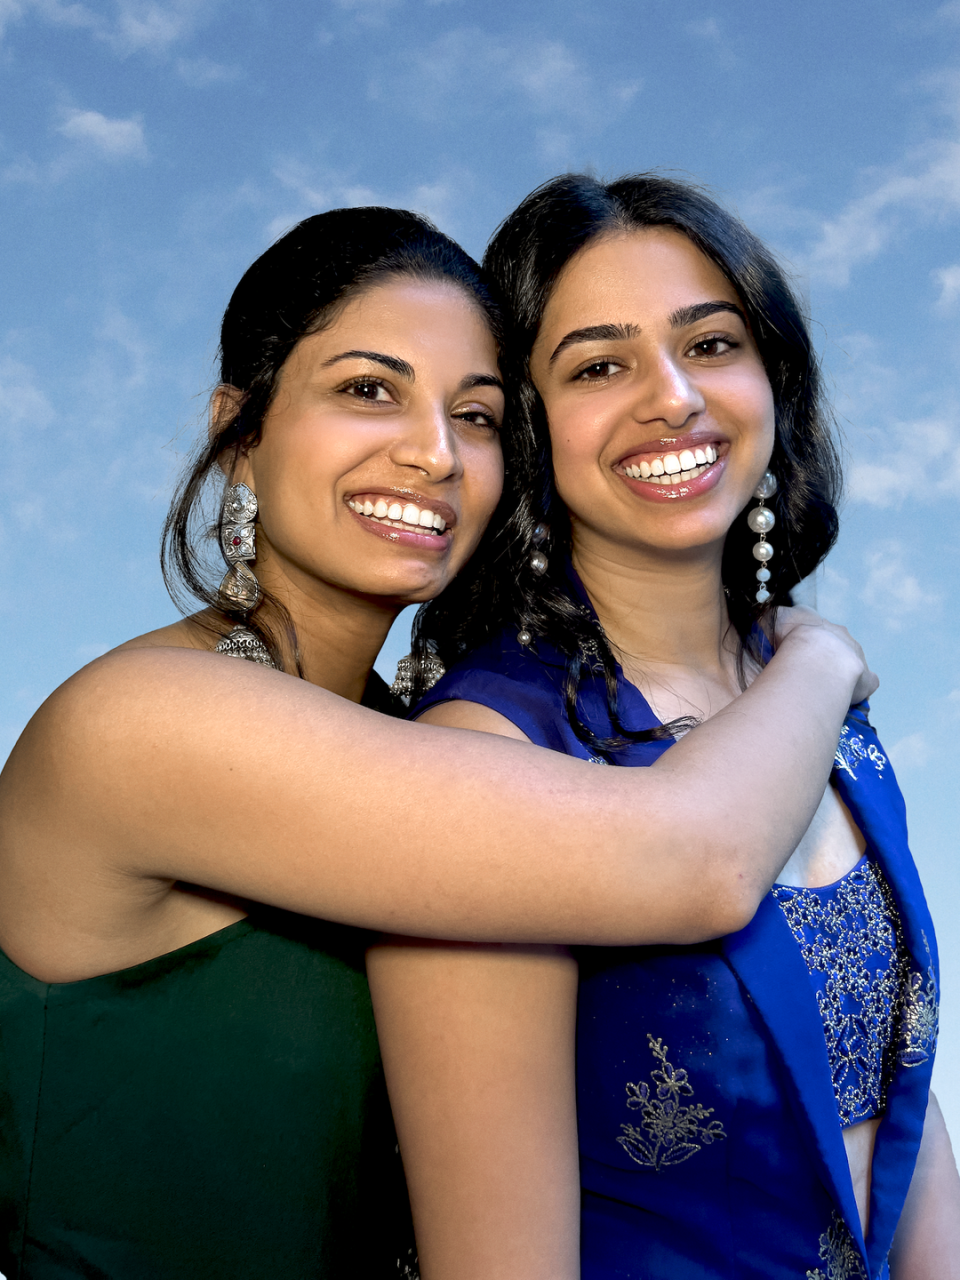 sisters and sani designers niki and ritika shamdasani hug each other in a headshot